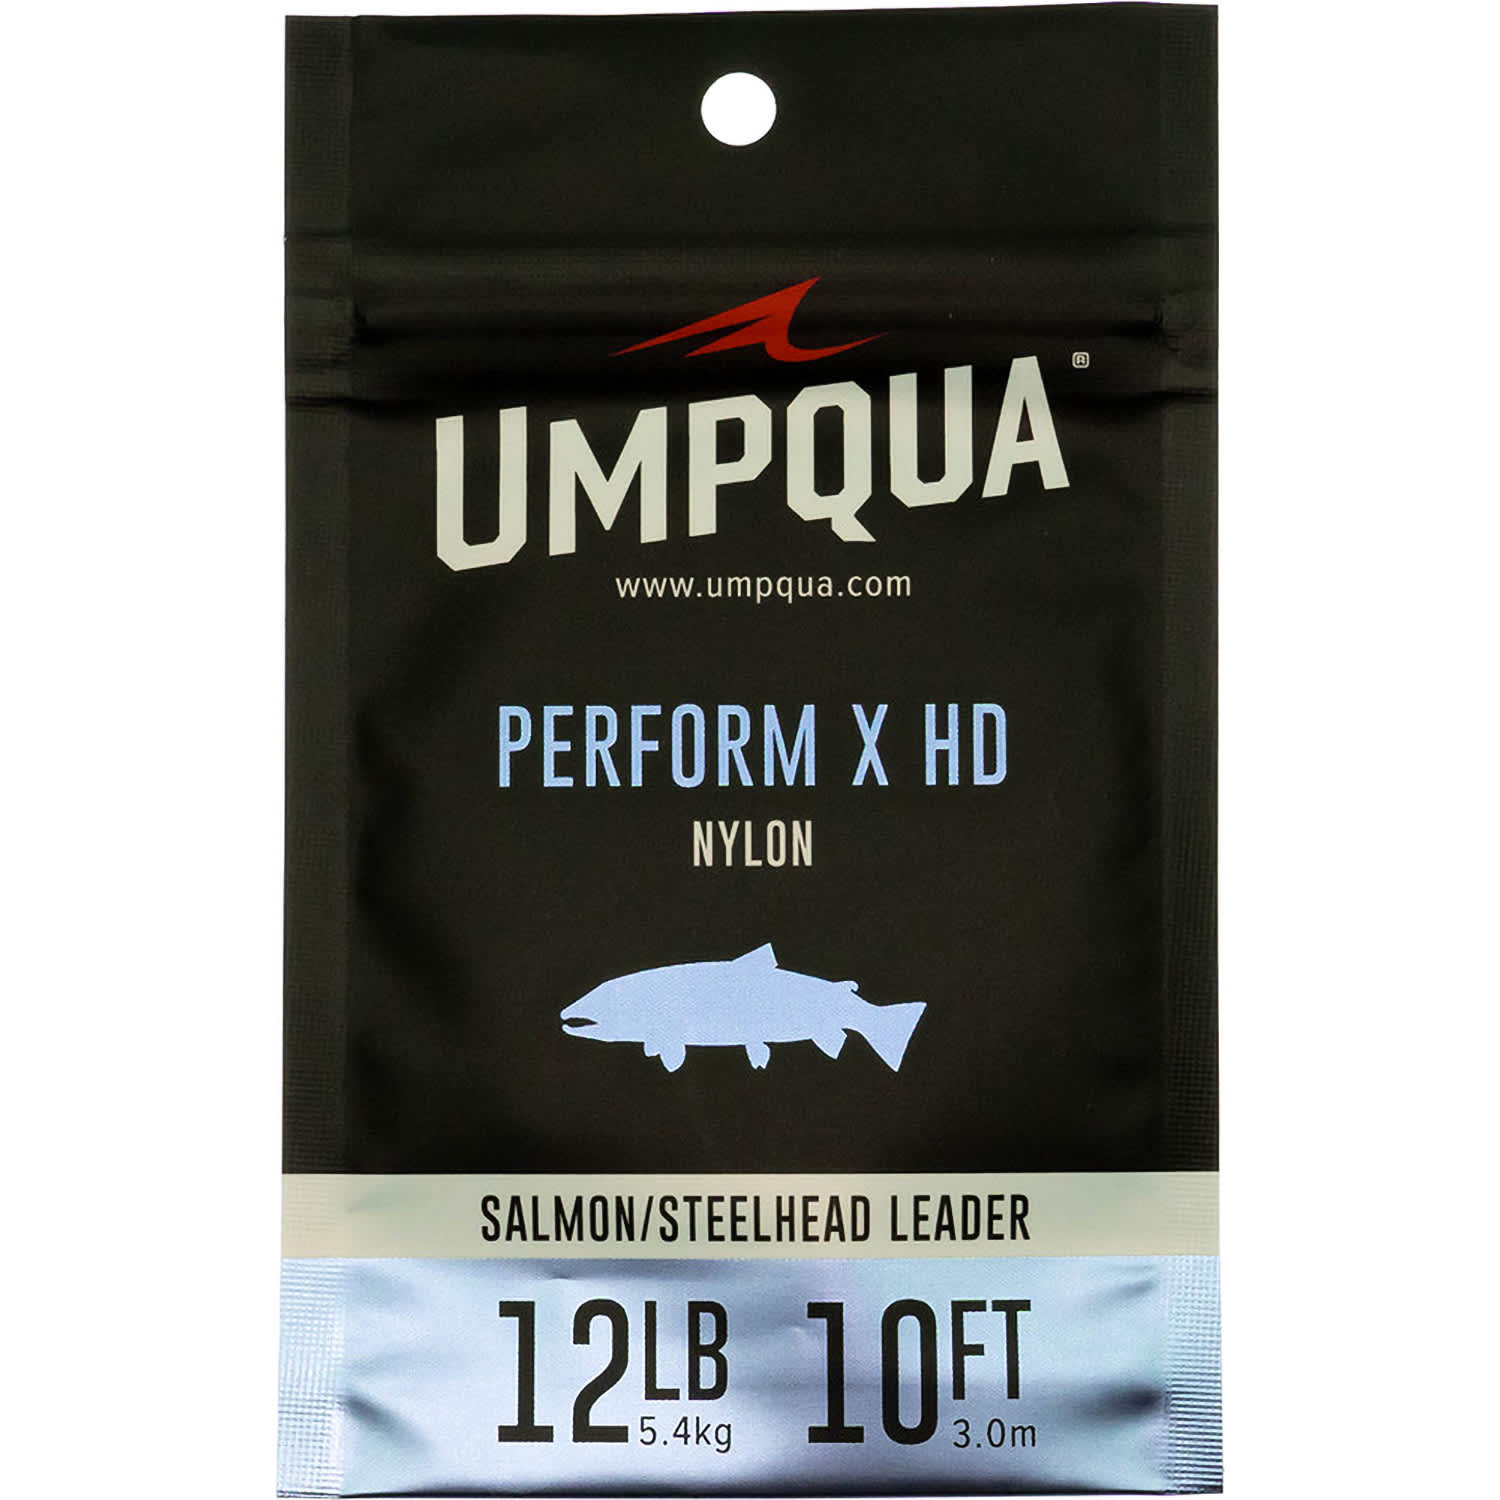 Umpqua Perform X HD Salmon/Steelhead Leader